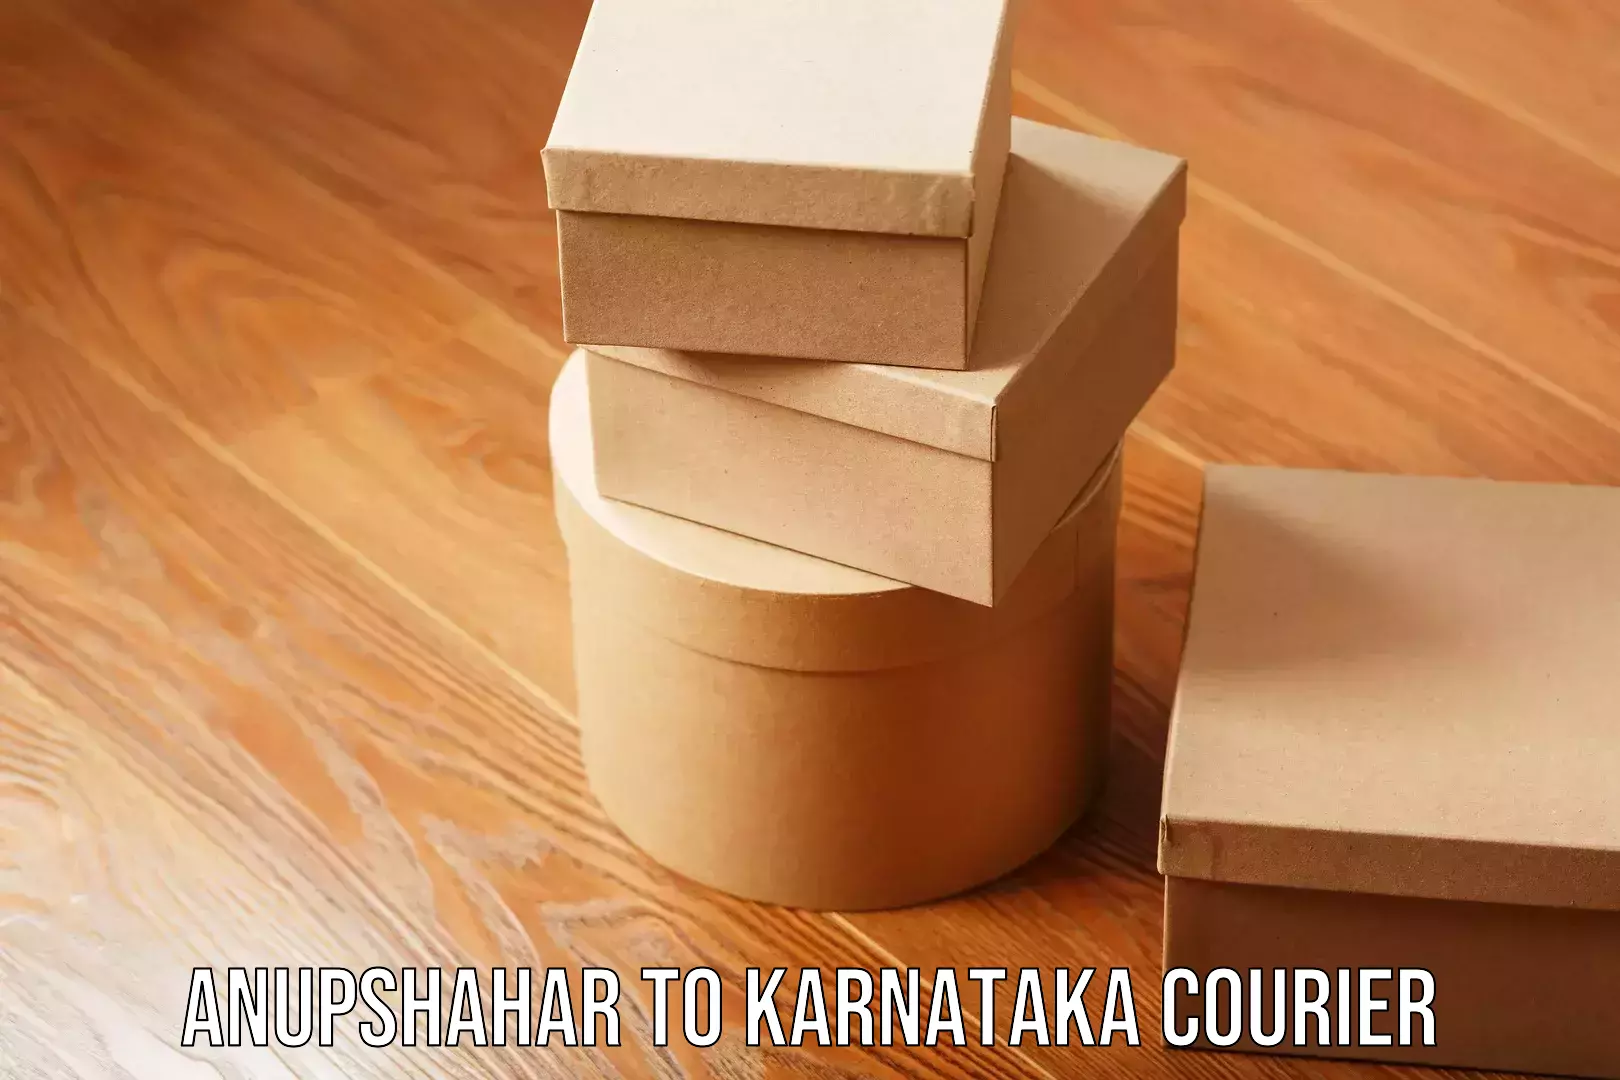 Professional courier handling Anupshahar to Karnataka